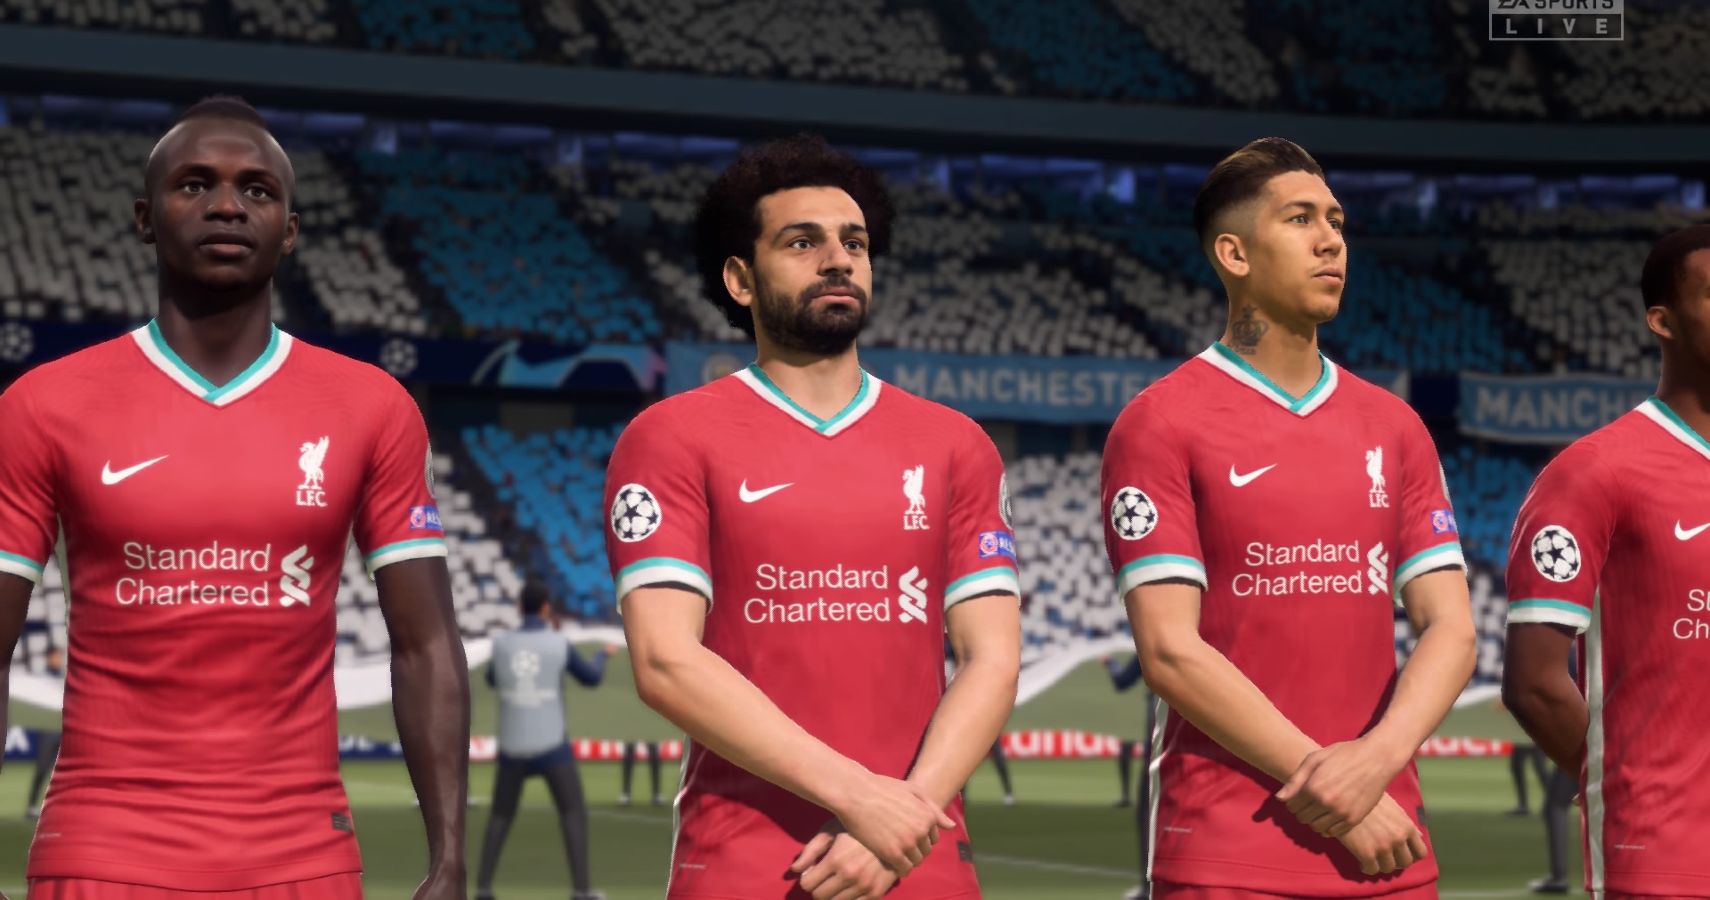 FIFA 21 Mane, Salah, and Firmino